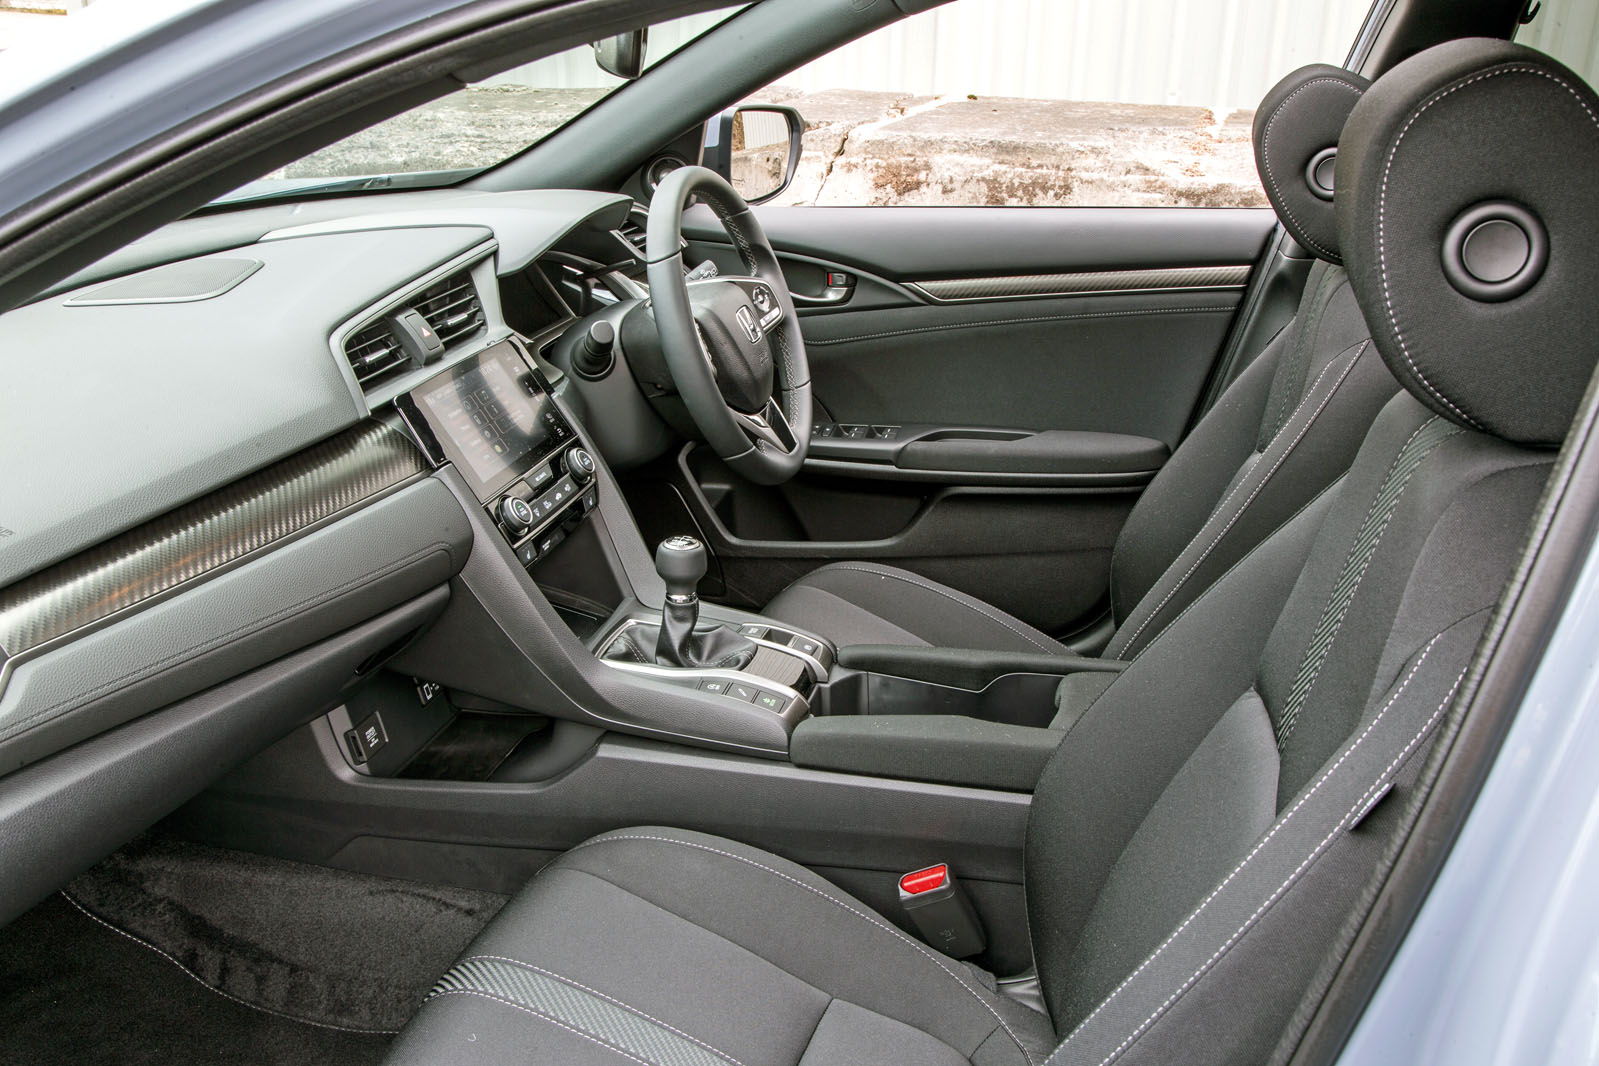 Honda Civic interior